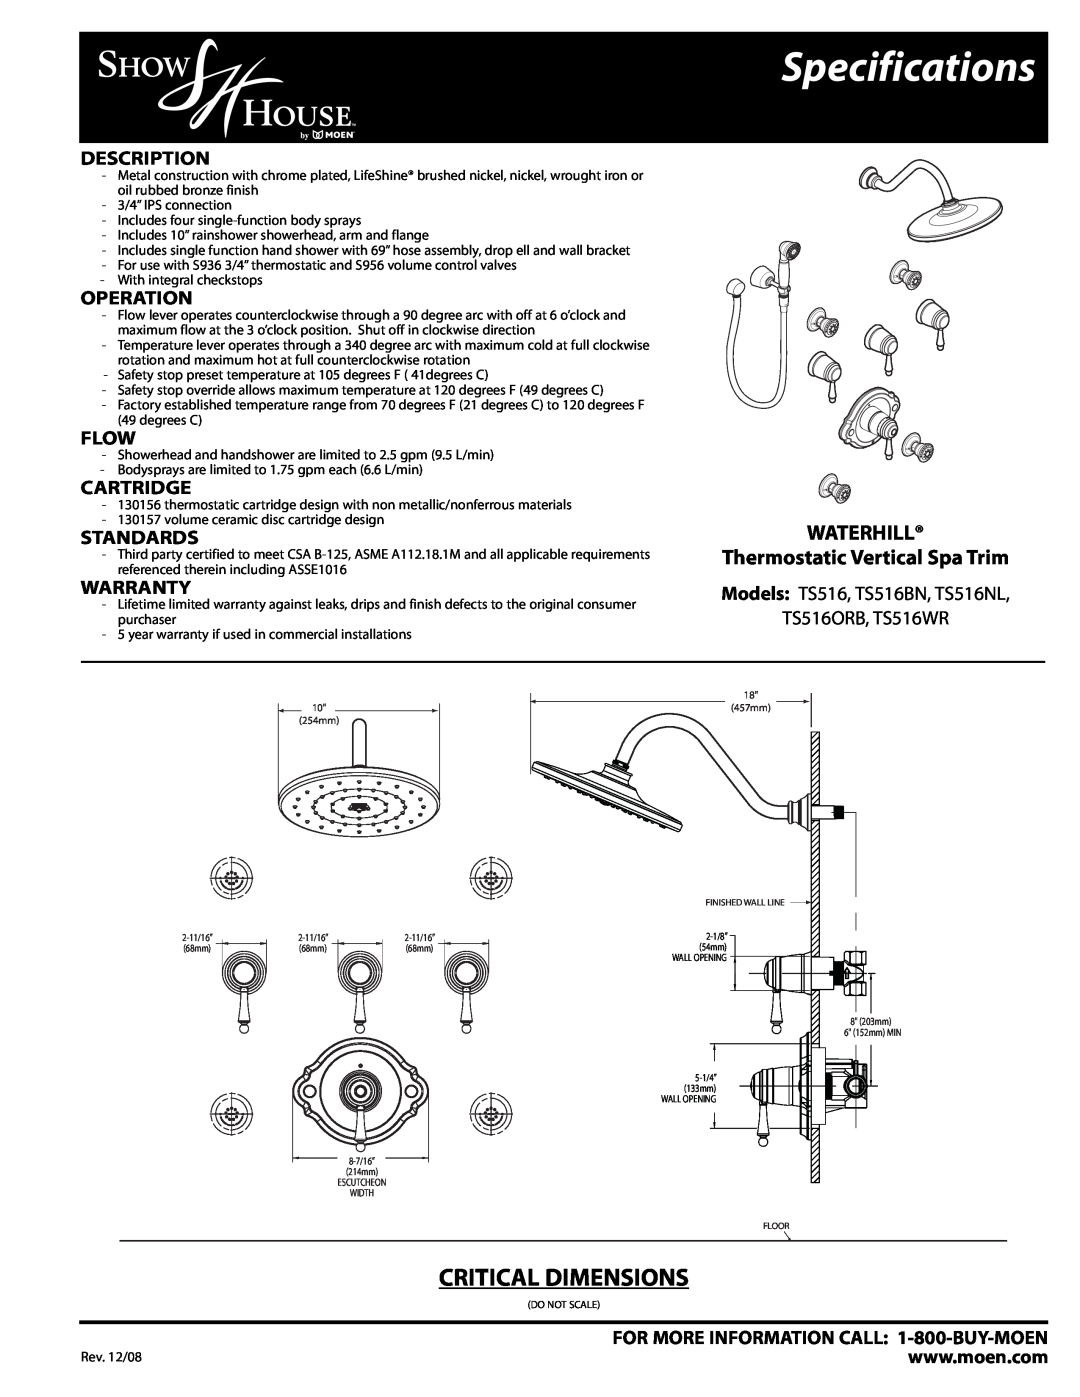 Moen TS516ORB warranty Specifications, WATERHILL Thermostatic Vertical Spa Trim, Description, Operation, Flow, Cartridge 